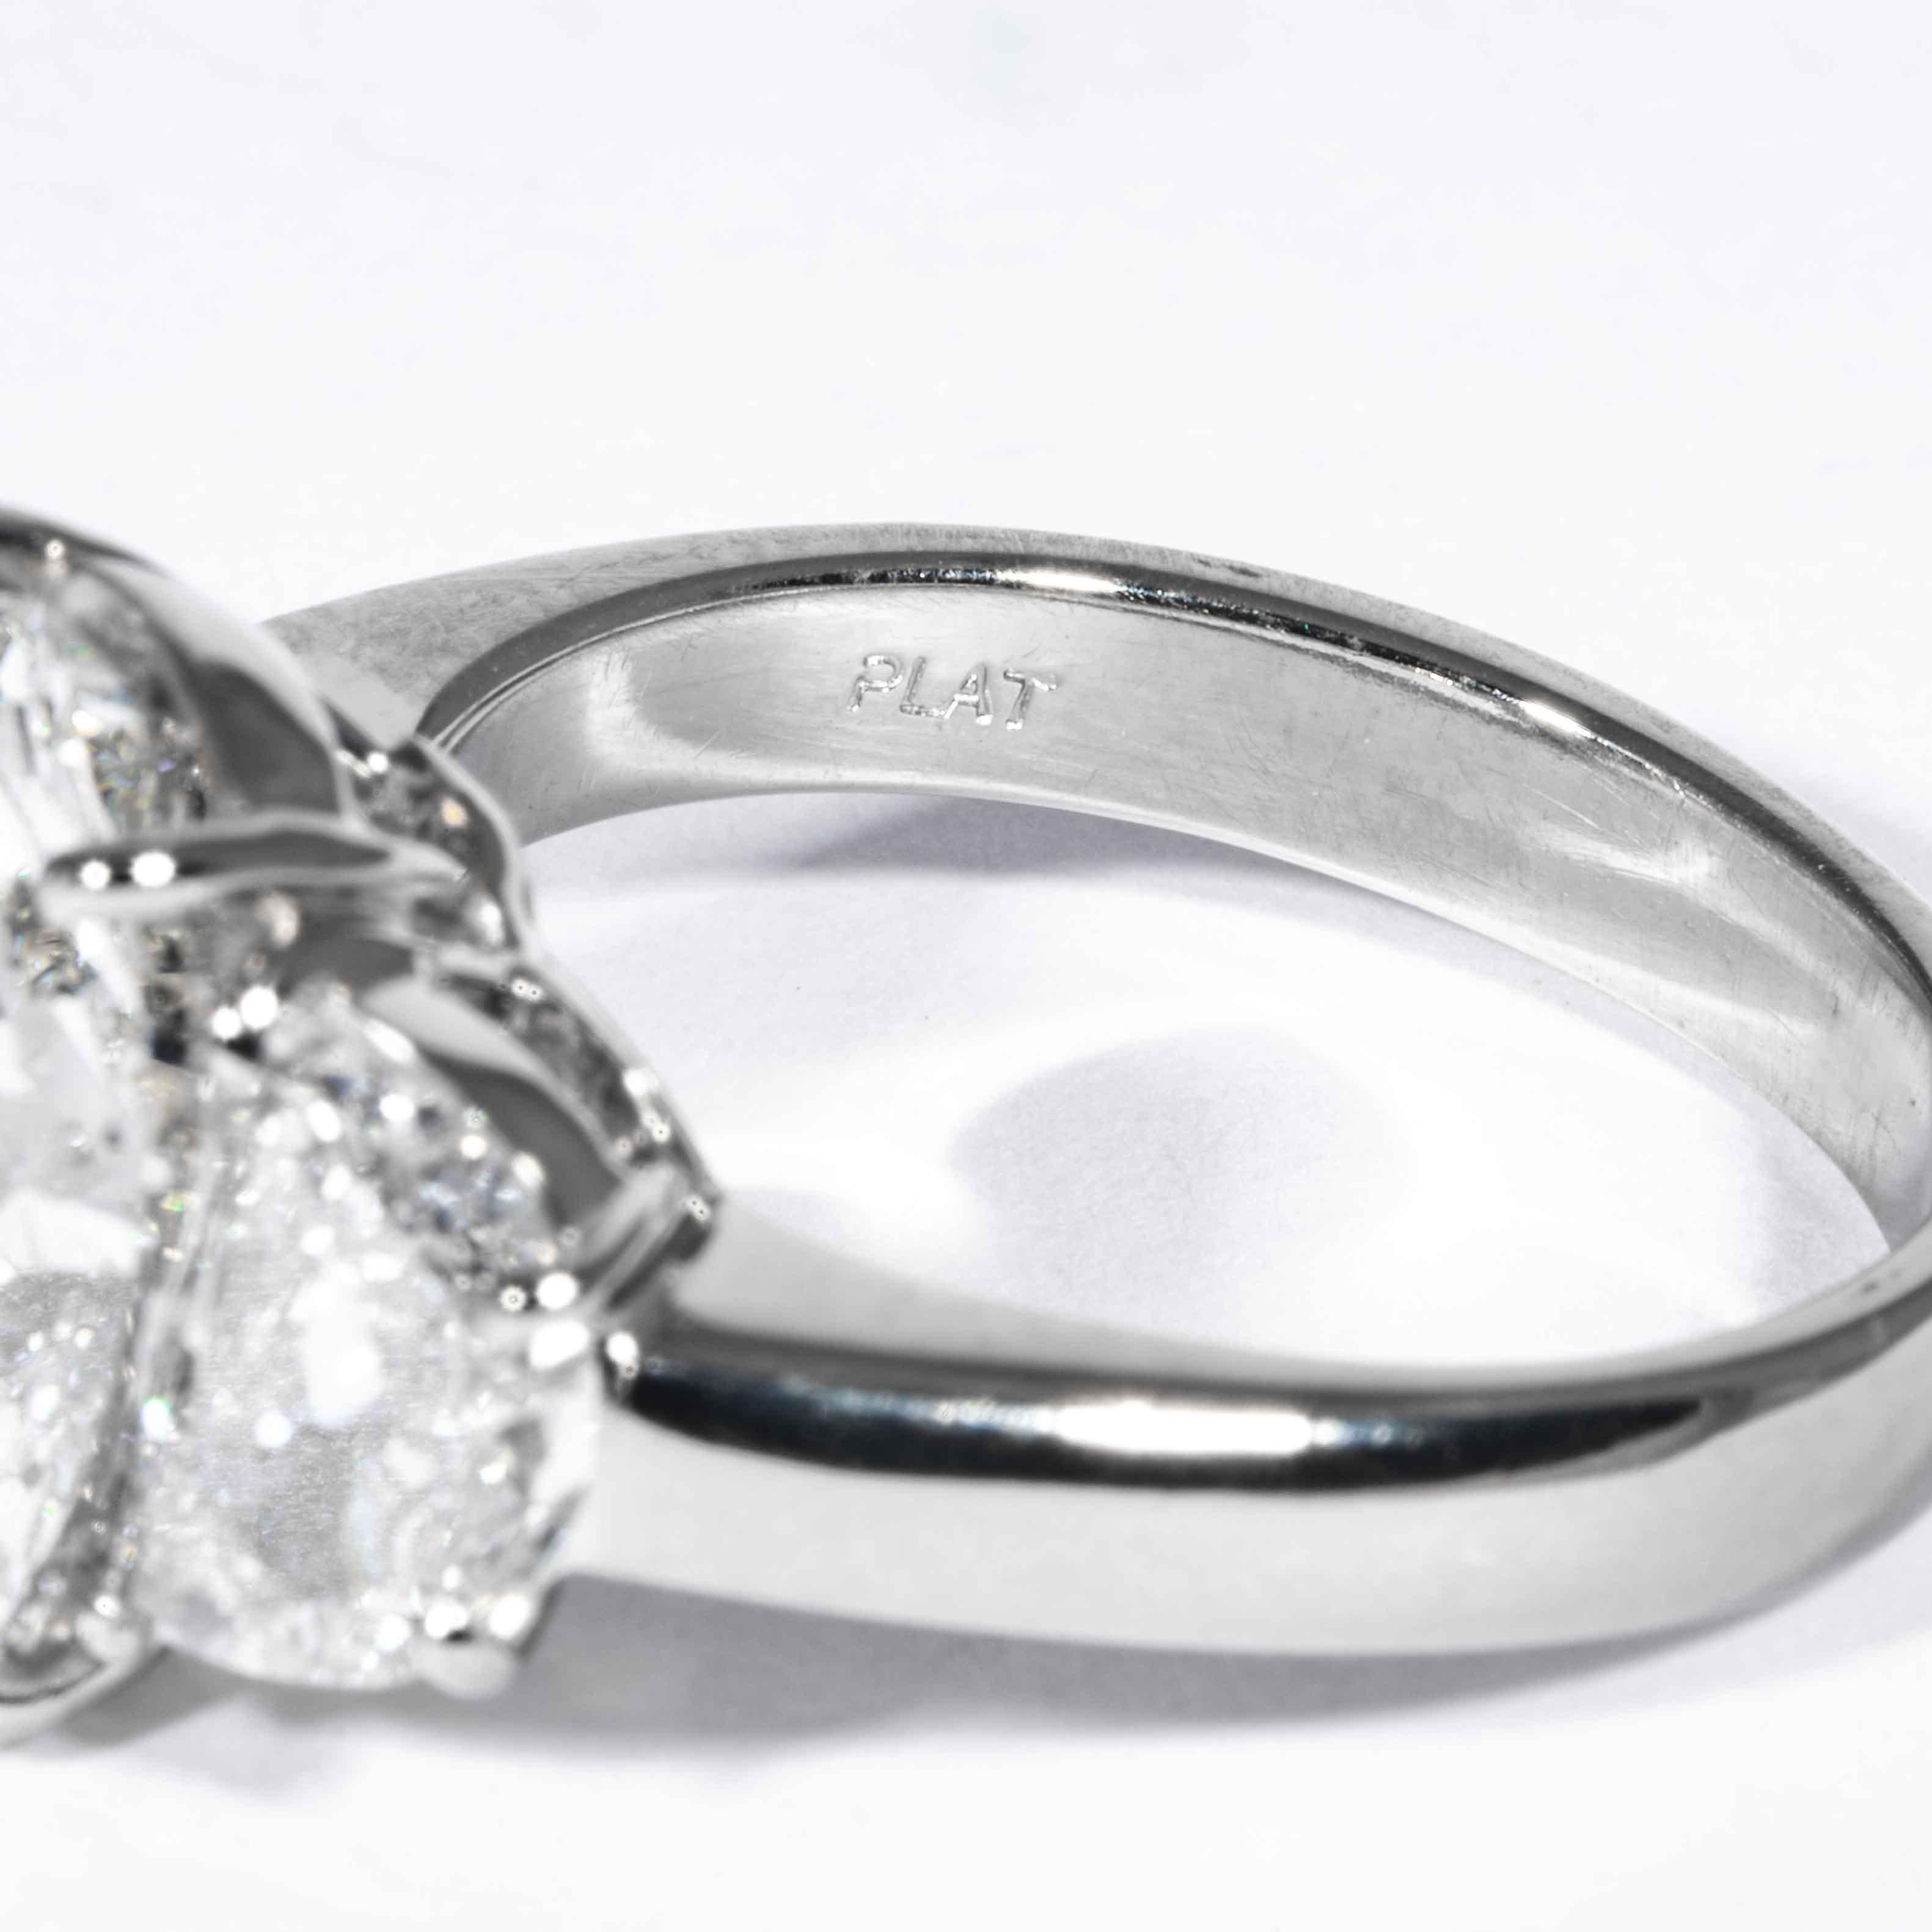 Shreve, Crump & Low GIA Certified 4.12 Carat G SI1 Oval Cut Diamond 3-Stone Ring 1